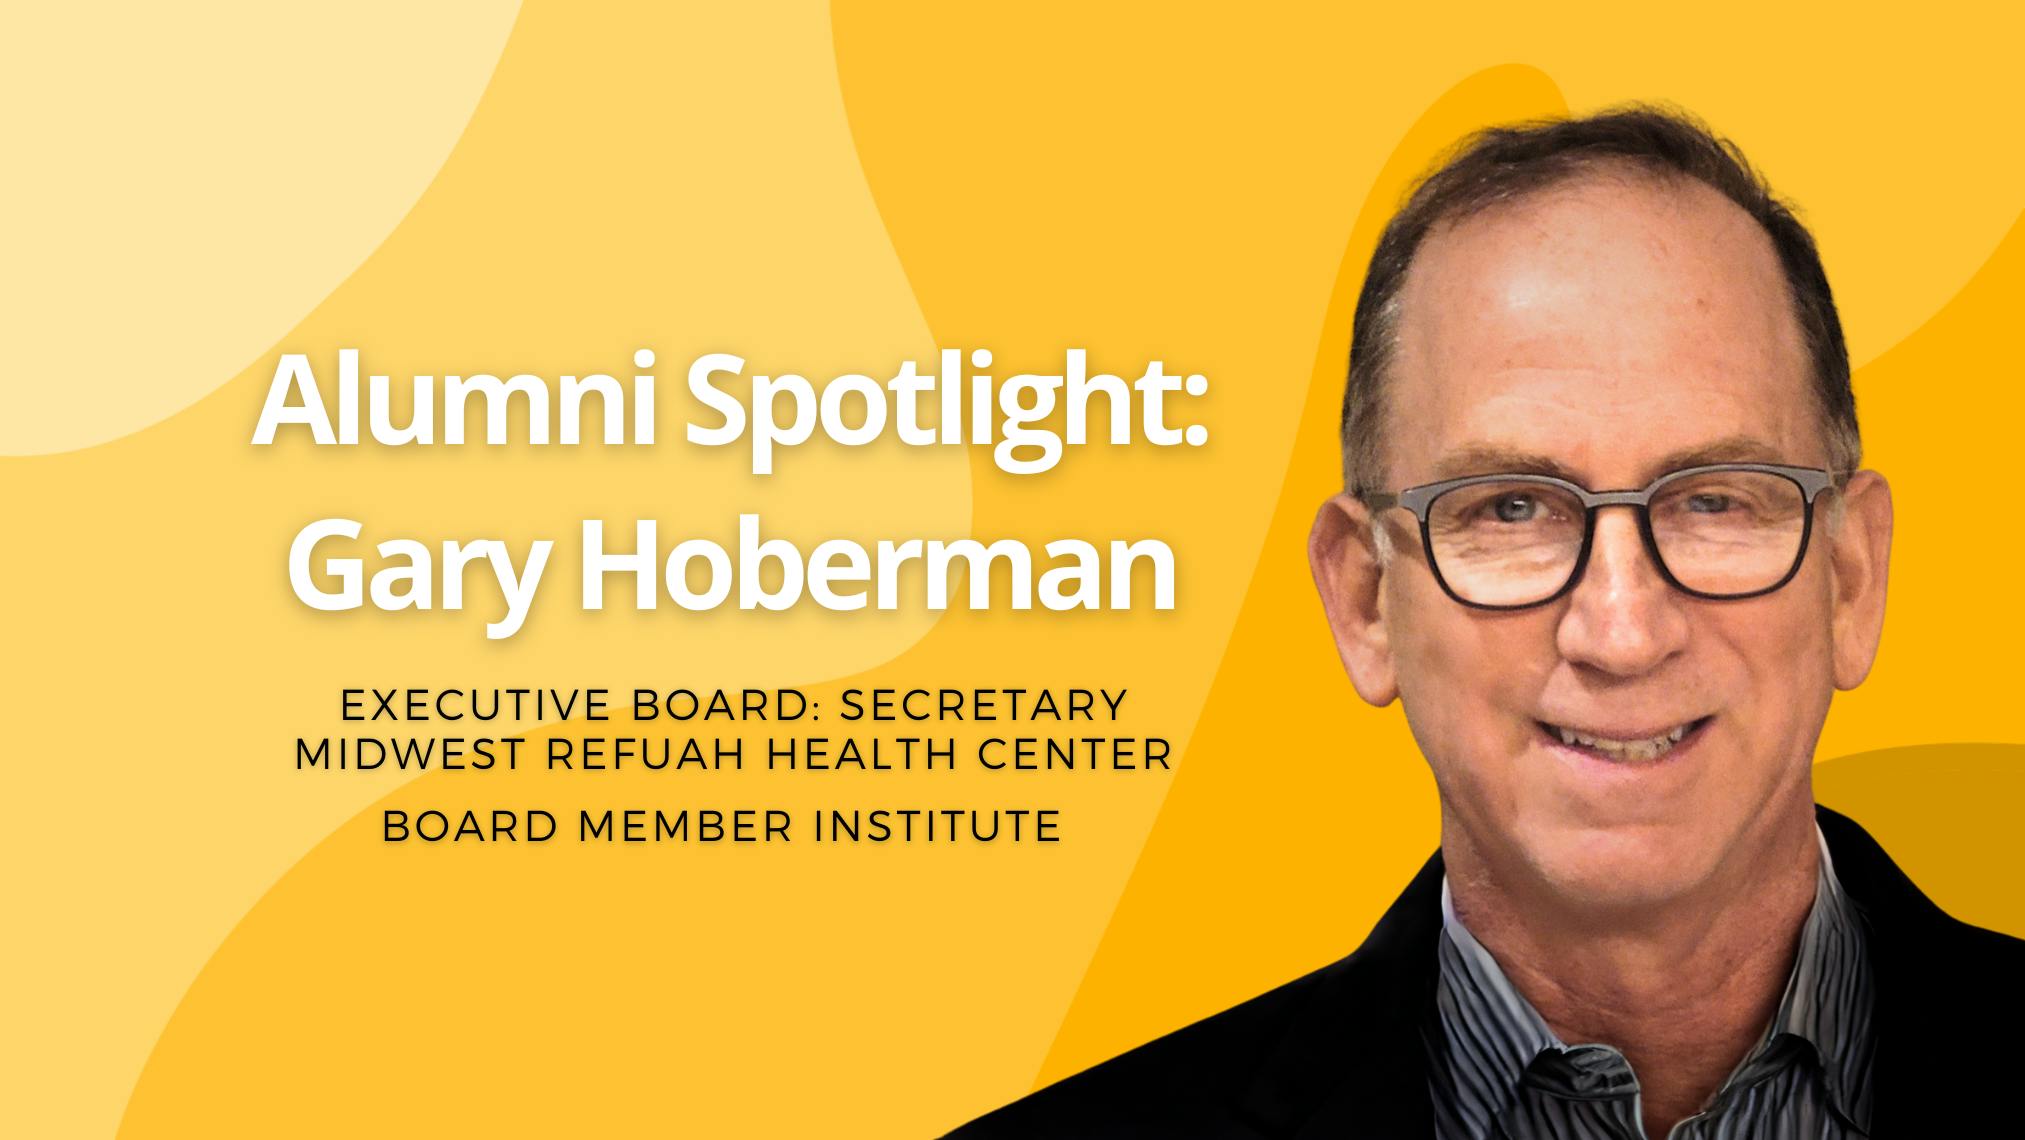 Alumni Spotlight: Gary Hoberman, Executive Board: Secretary, Midwest Refuah Health Center. Board Member Institute